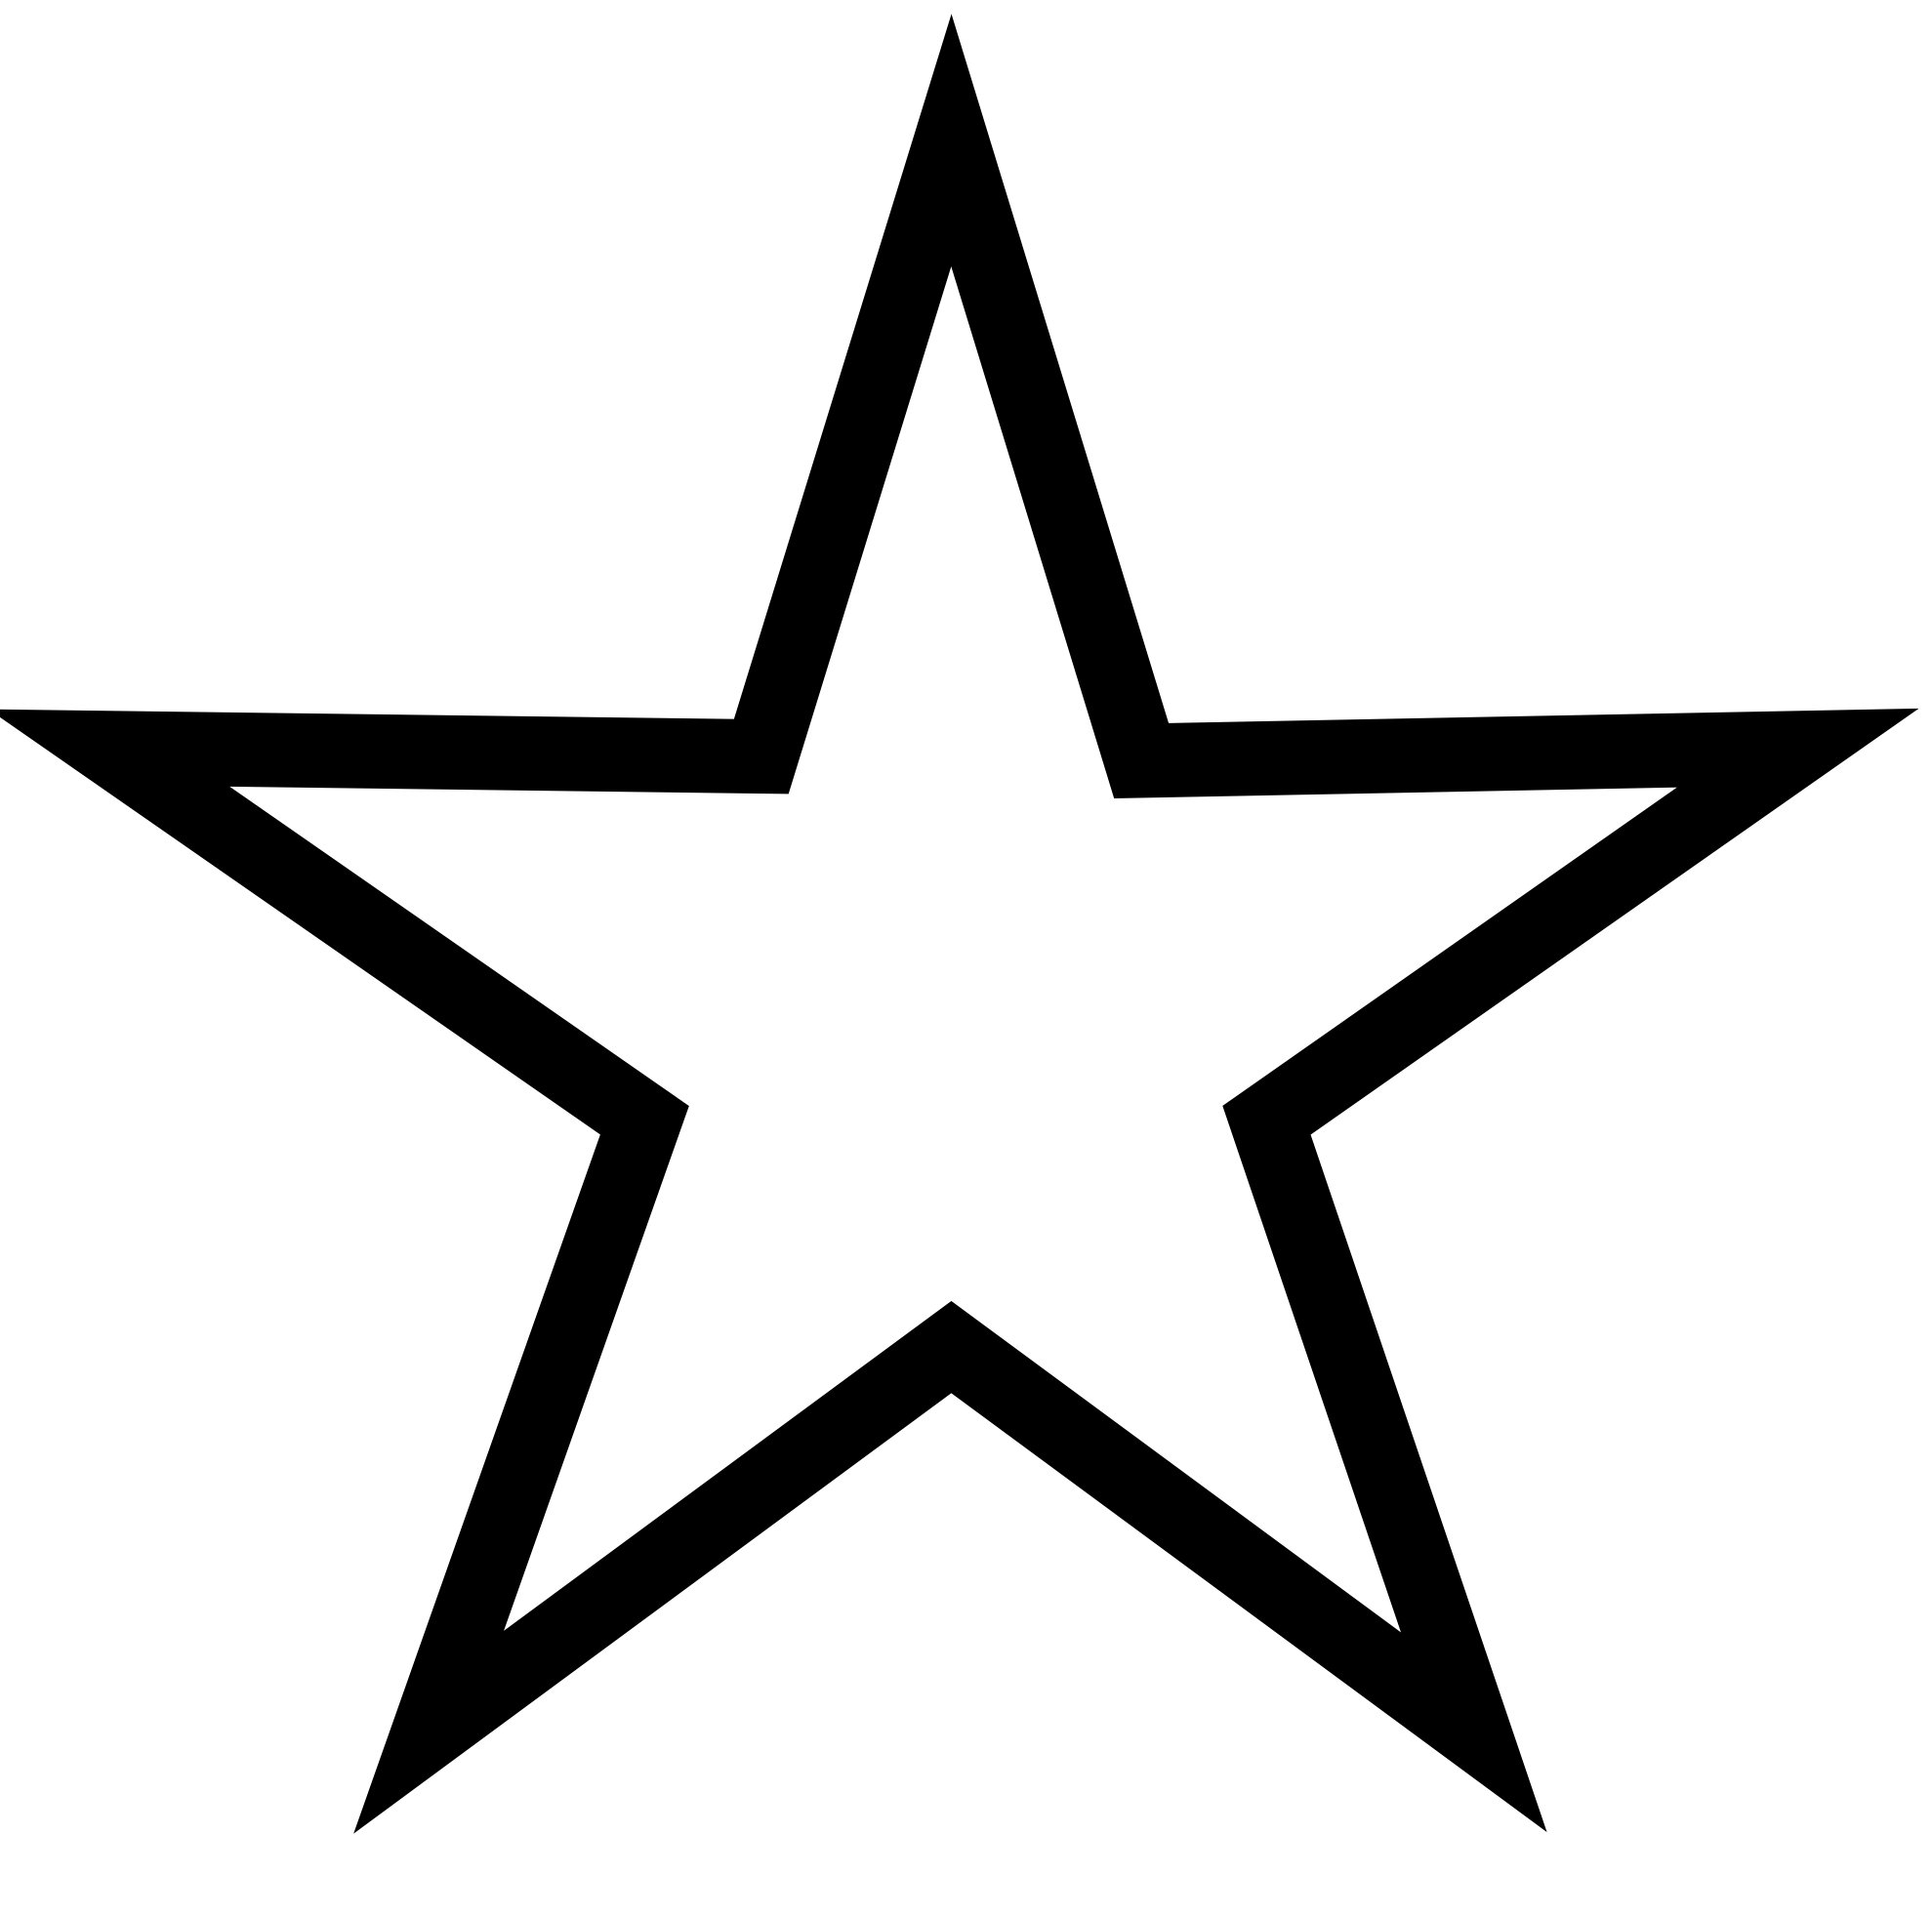 Black Star 